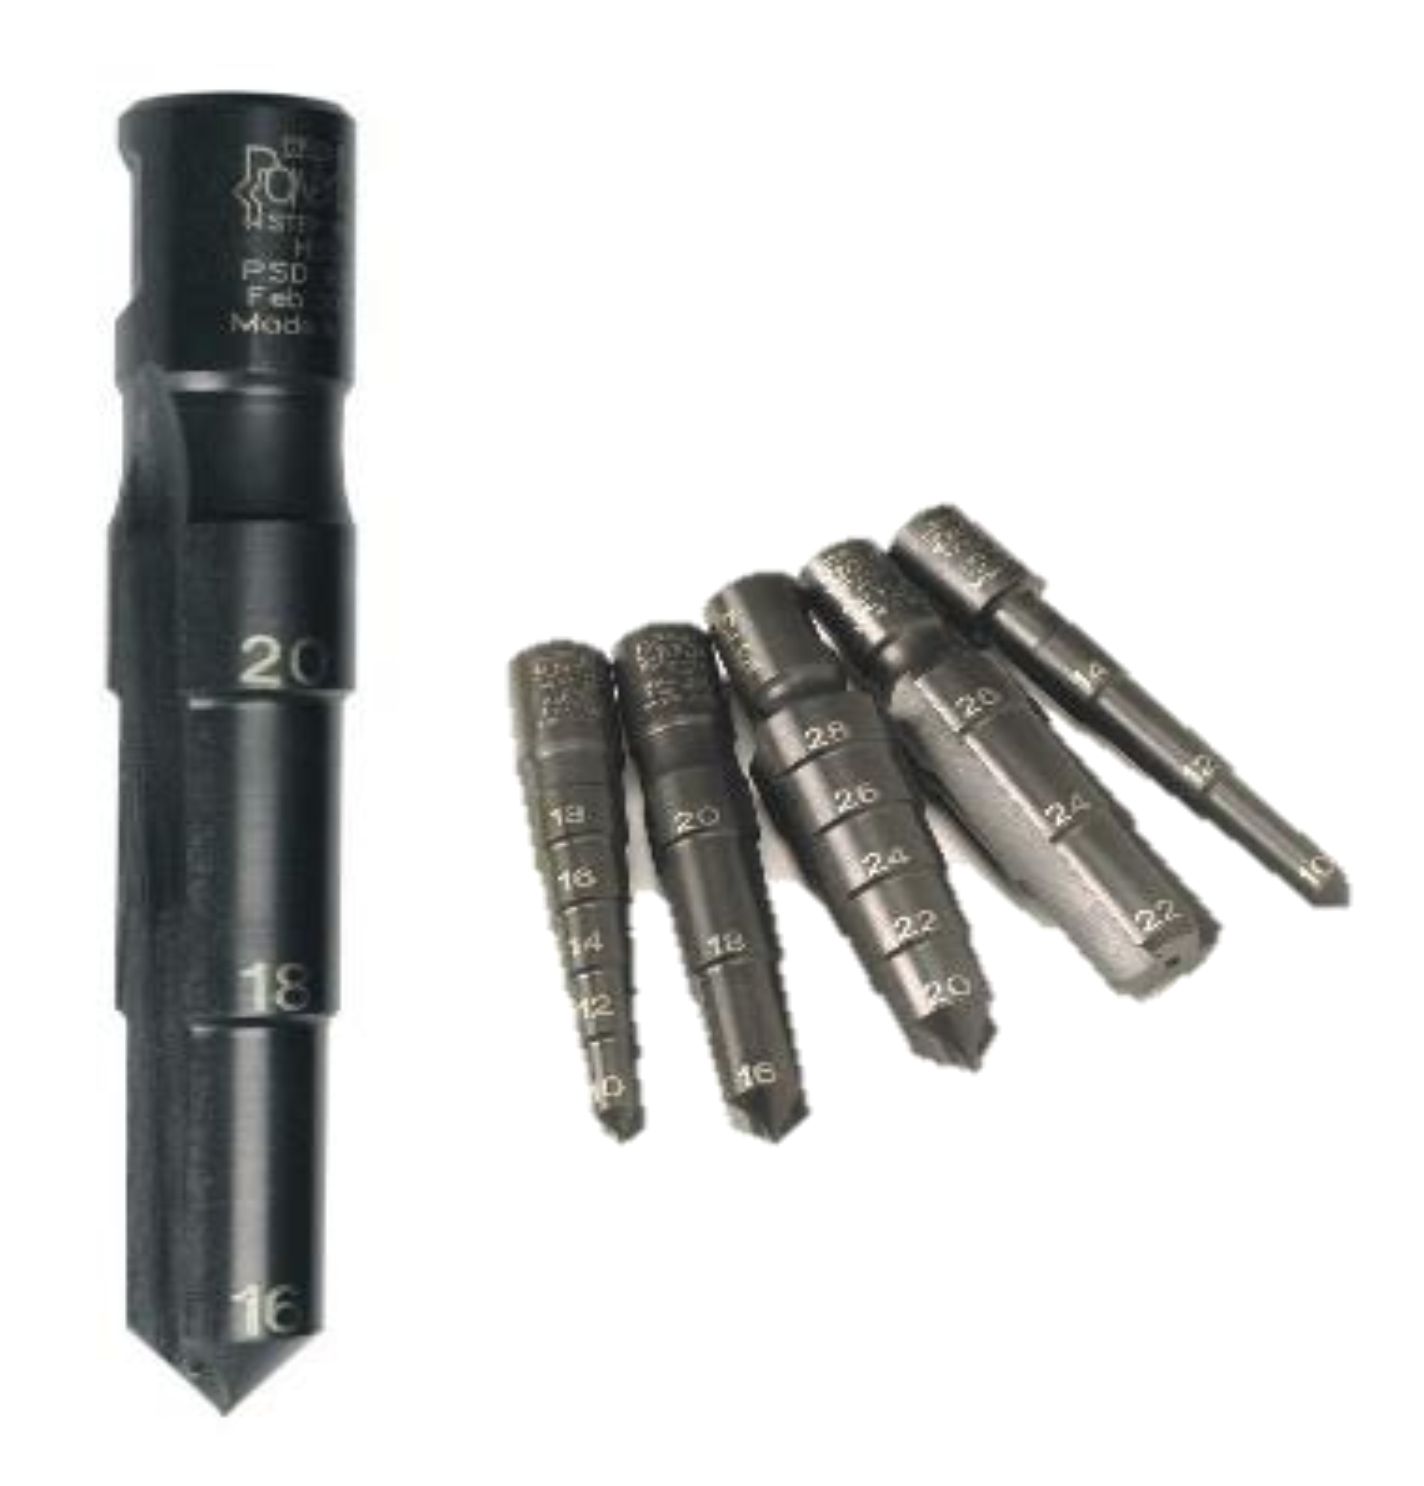 Powerbor trinnbor 10-14 mm, 10-12-14 materiale tykkelse 25 mm 216504